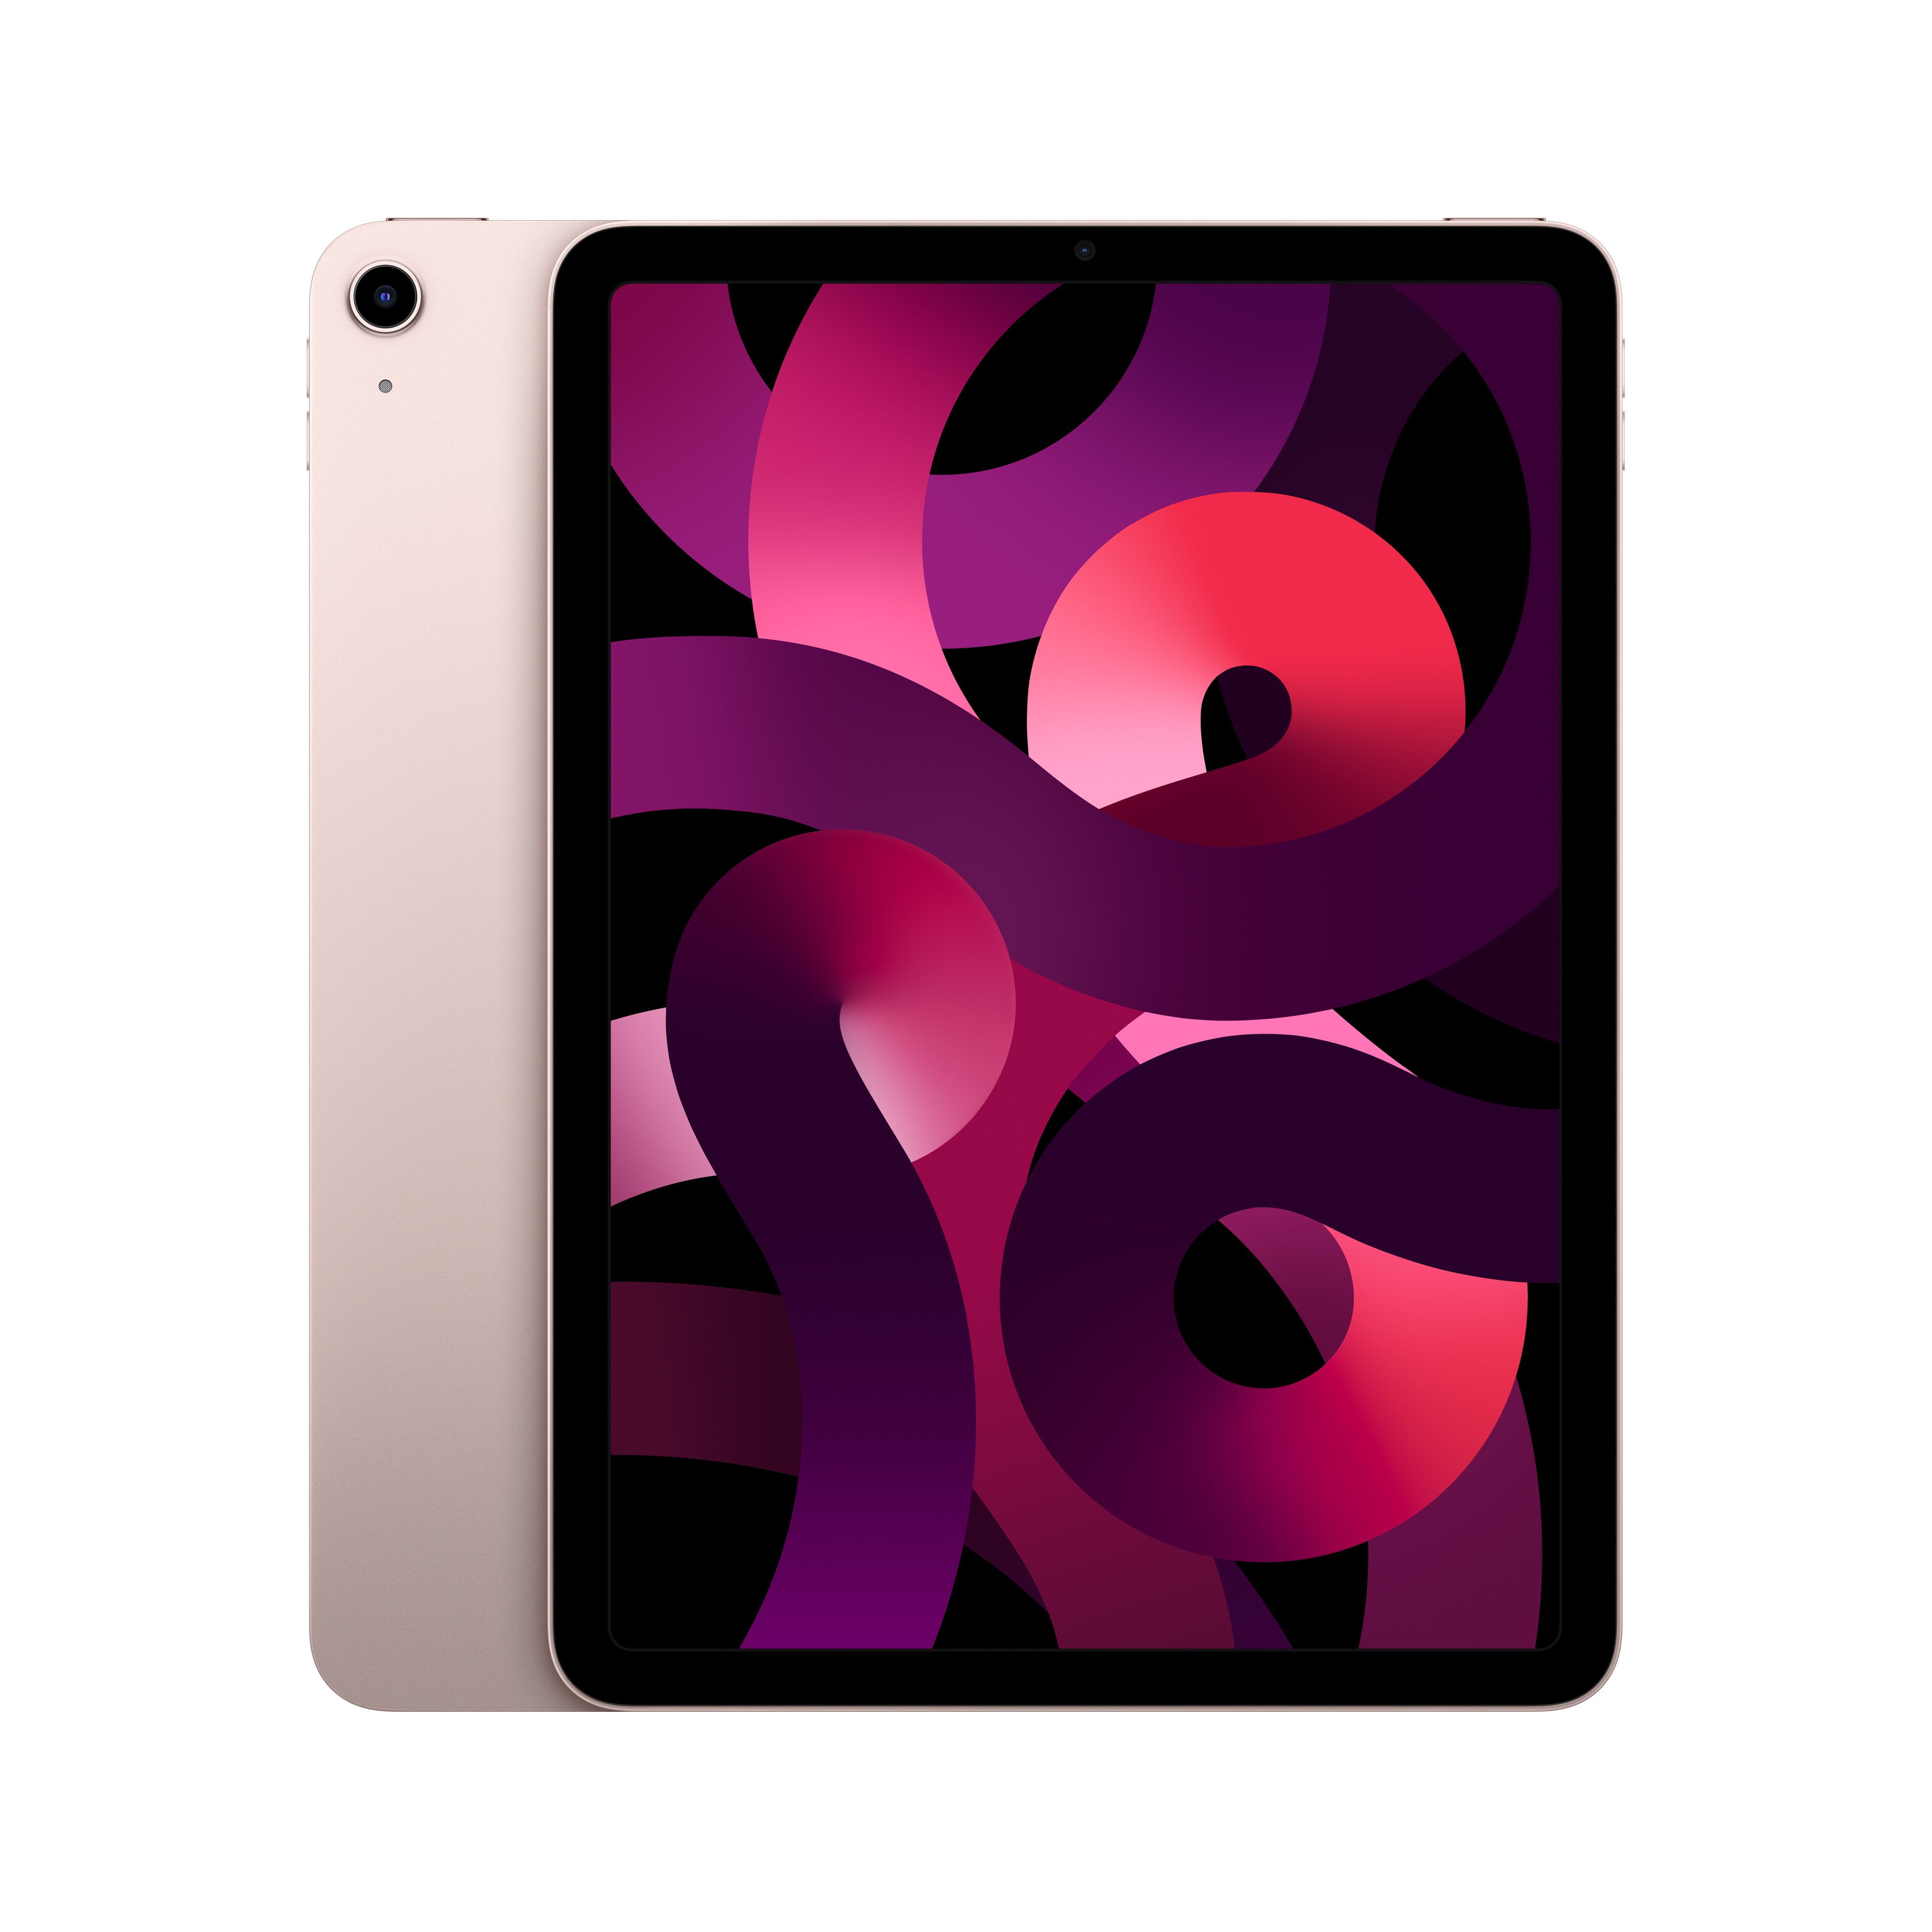 iPad Air - New Gauge Digital